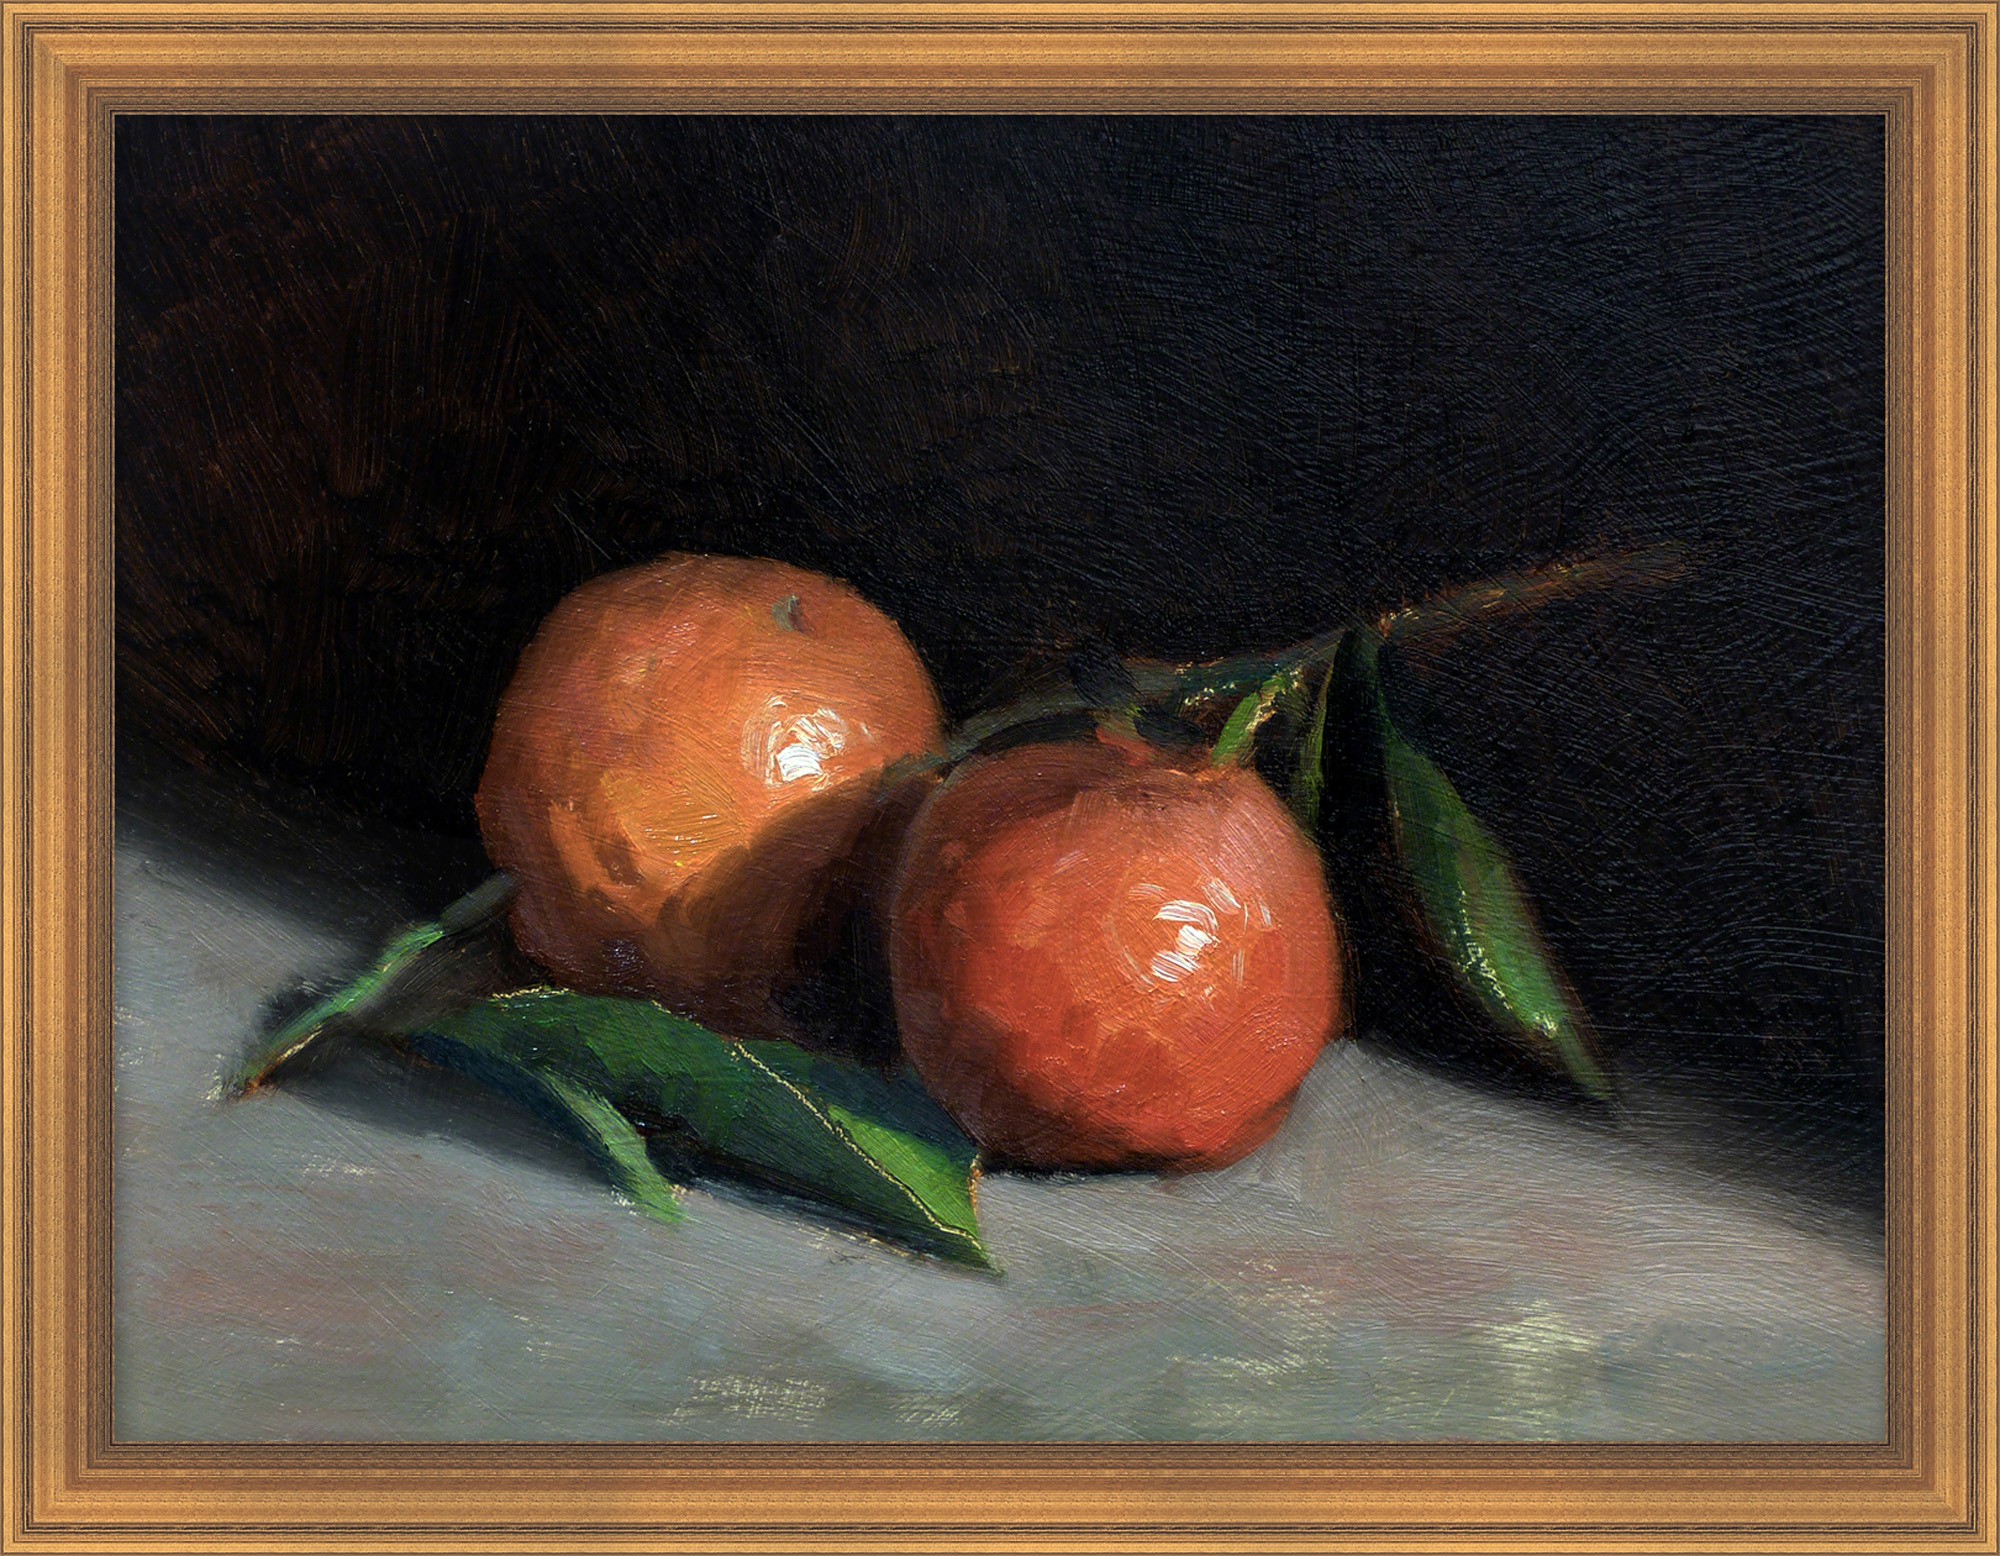 Painting of 2 oranges